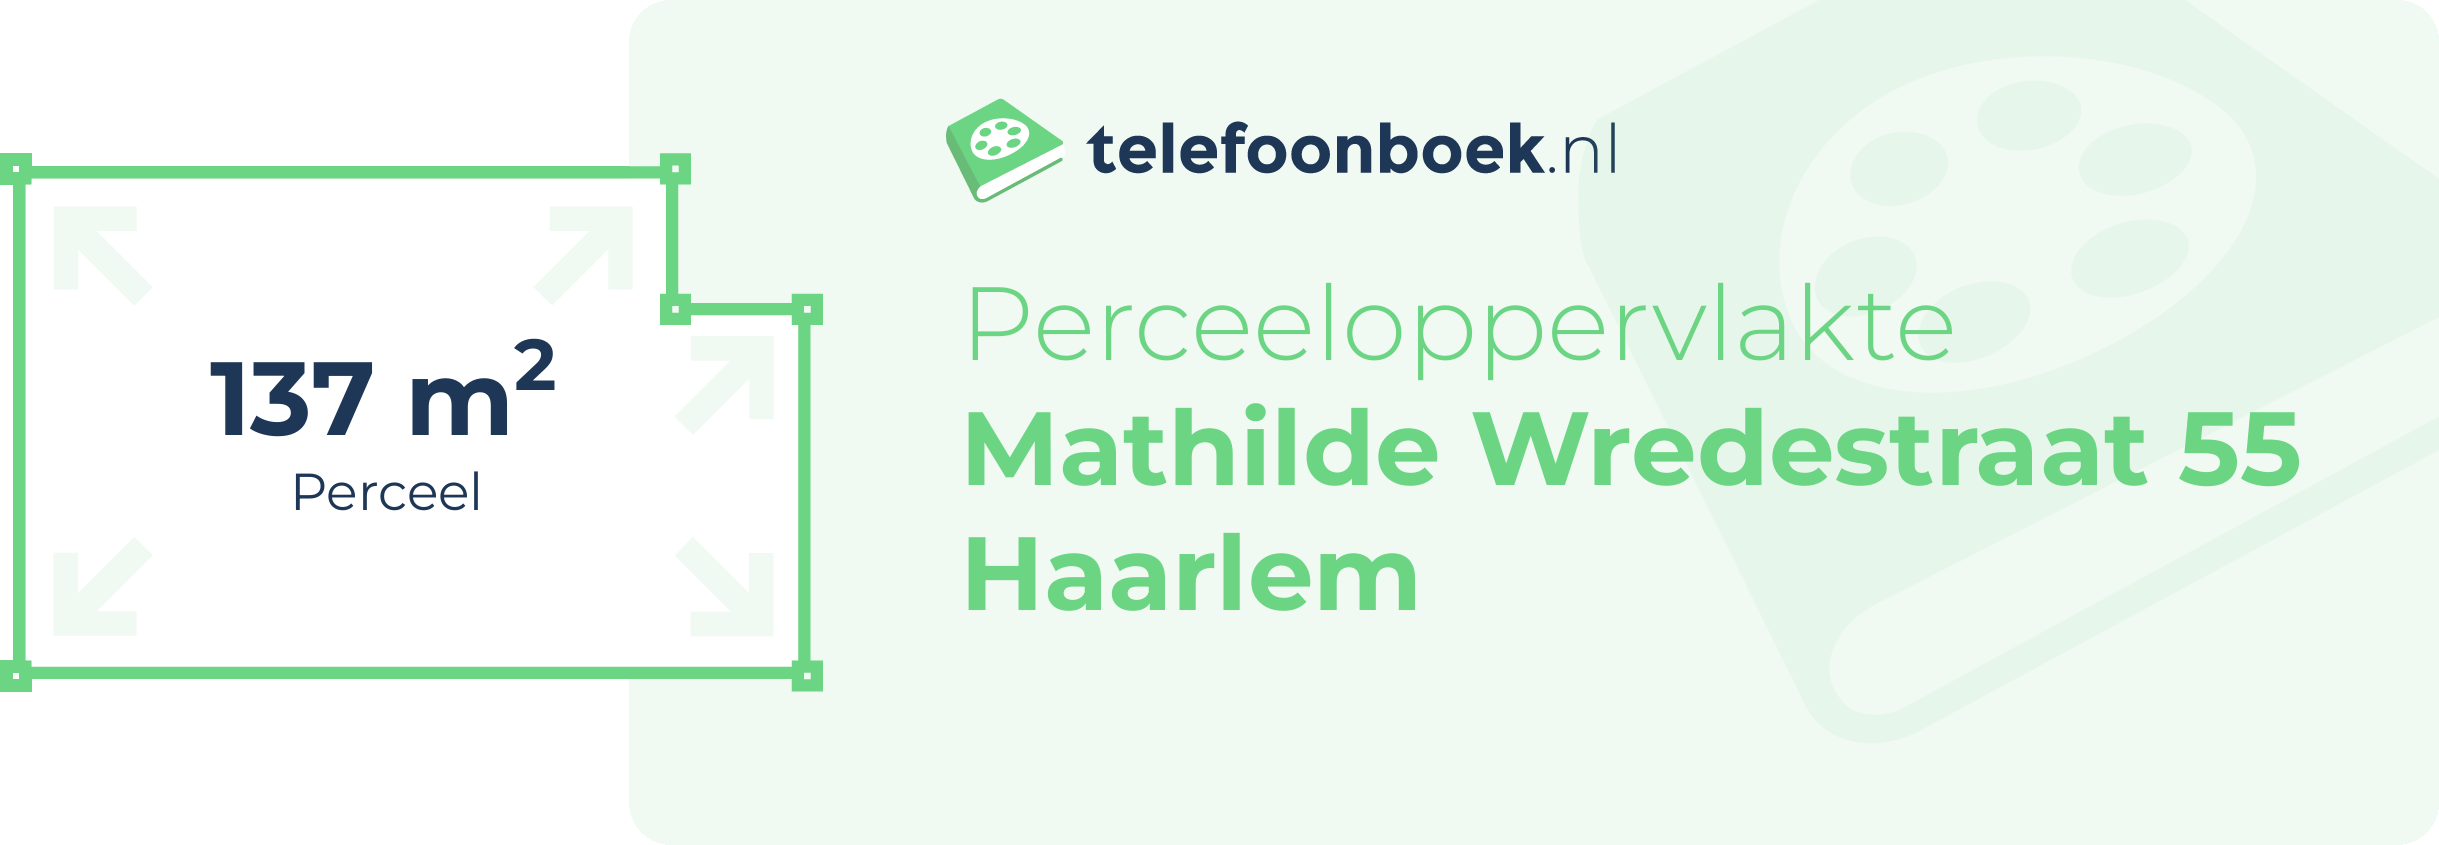 Perceeloppervlakte Mathilde Wredestraat 55 Haarlem